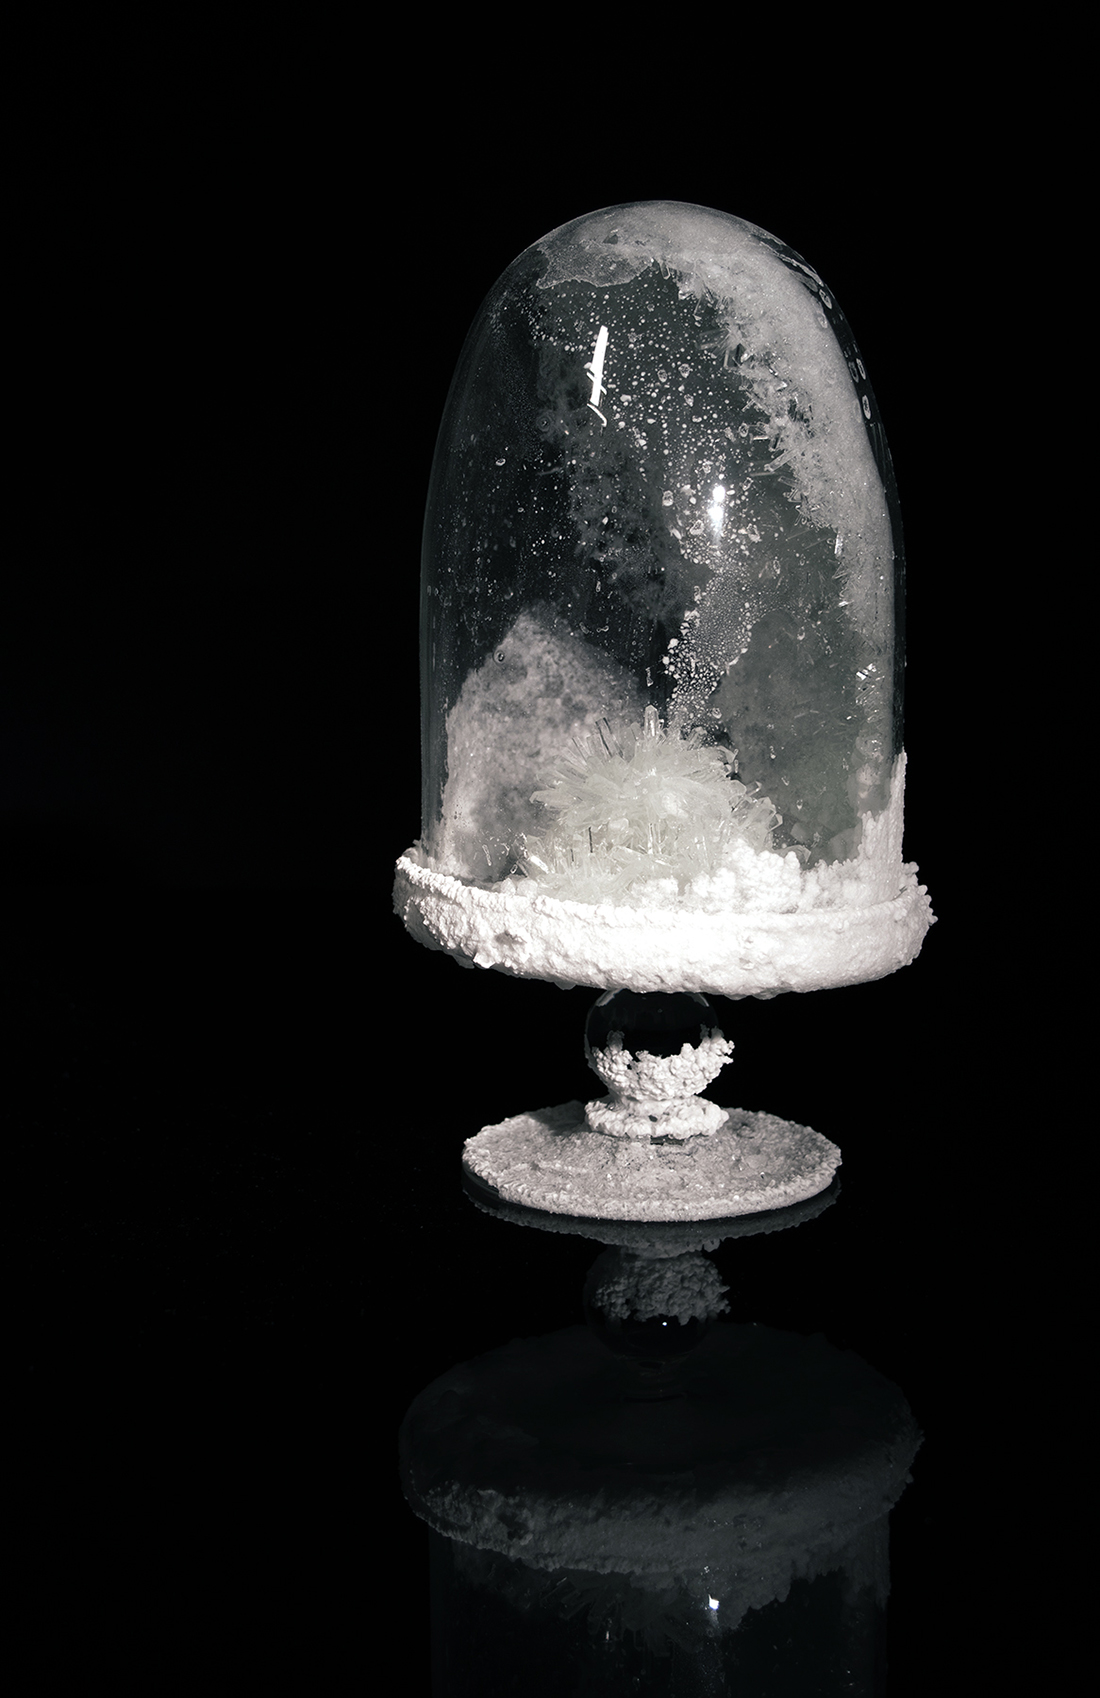 Crystal growing inside a glass vessel.